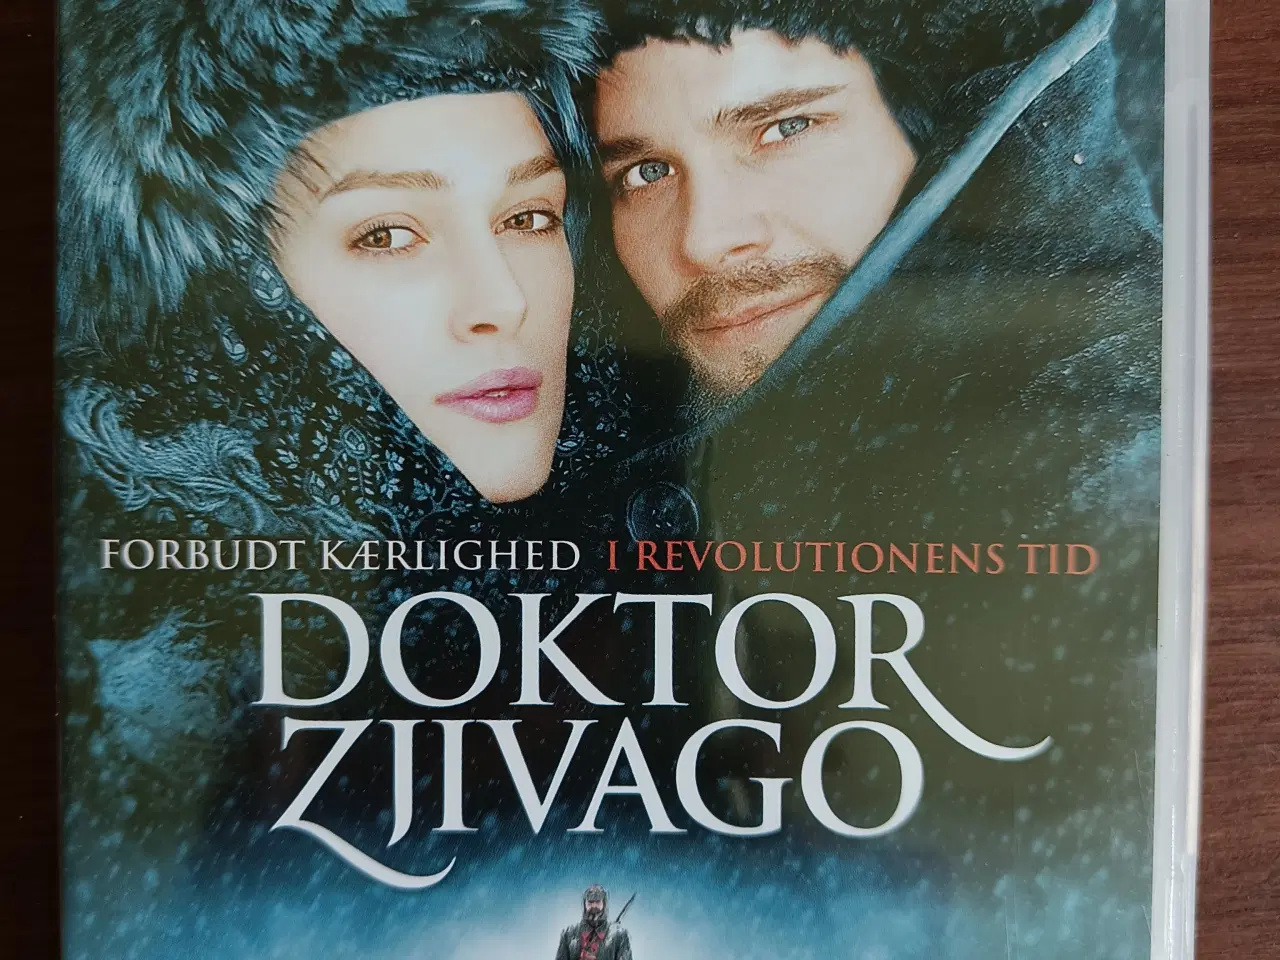 Billede 1 - DVD Doktor Zjivago